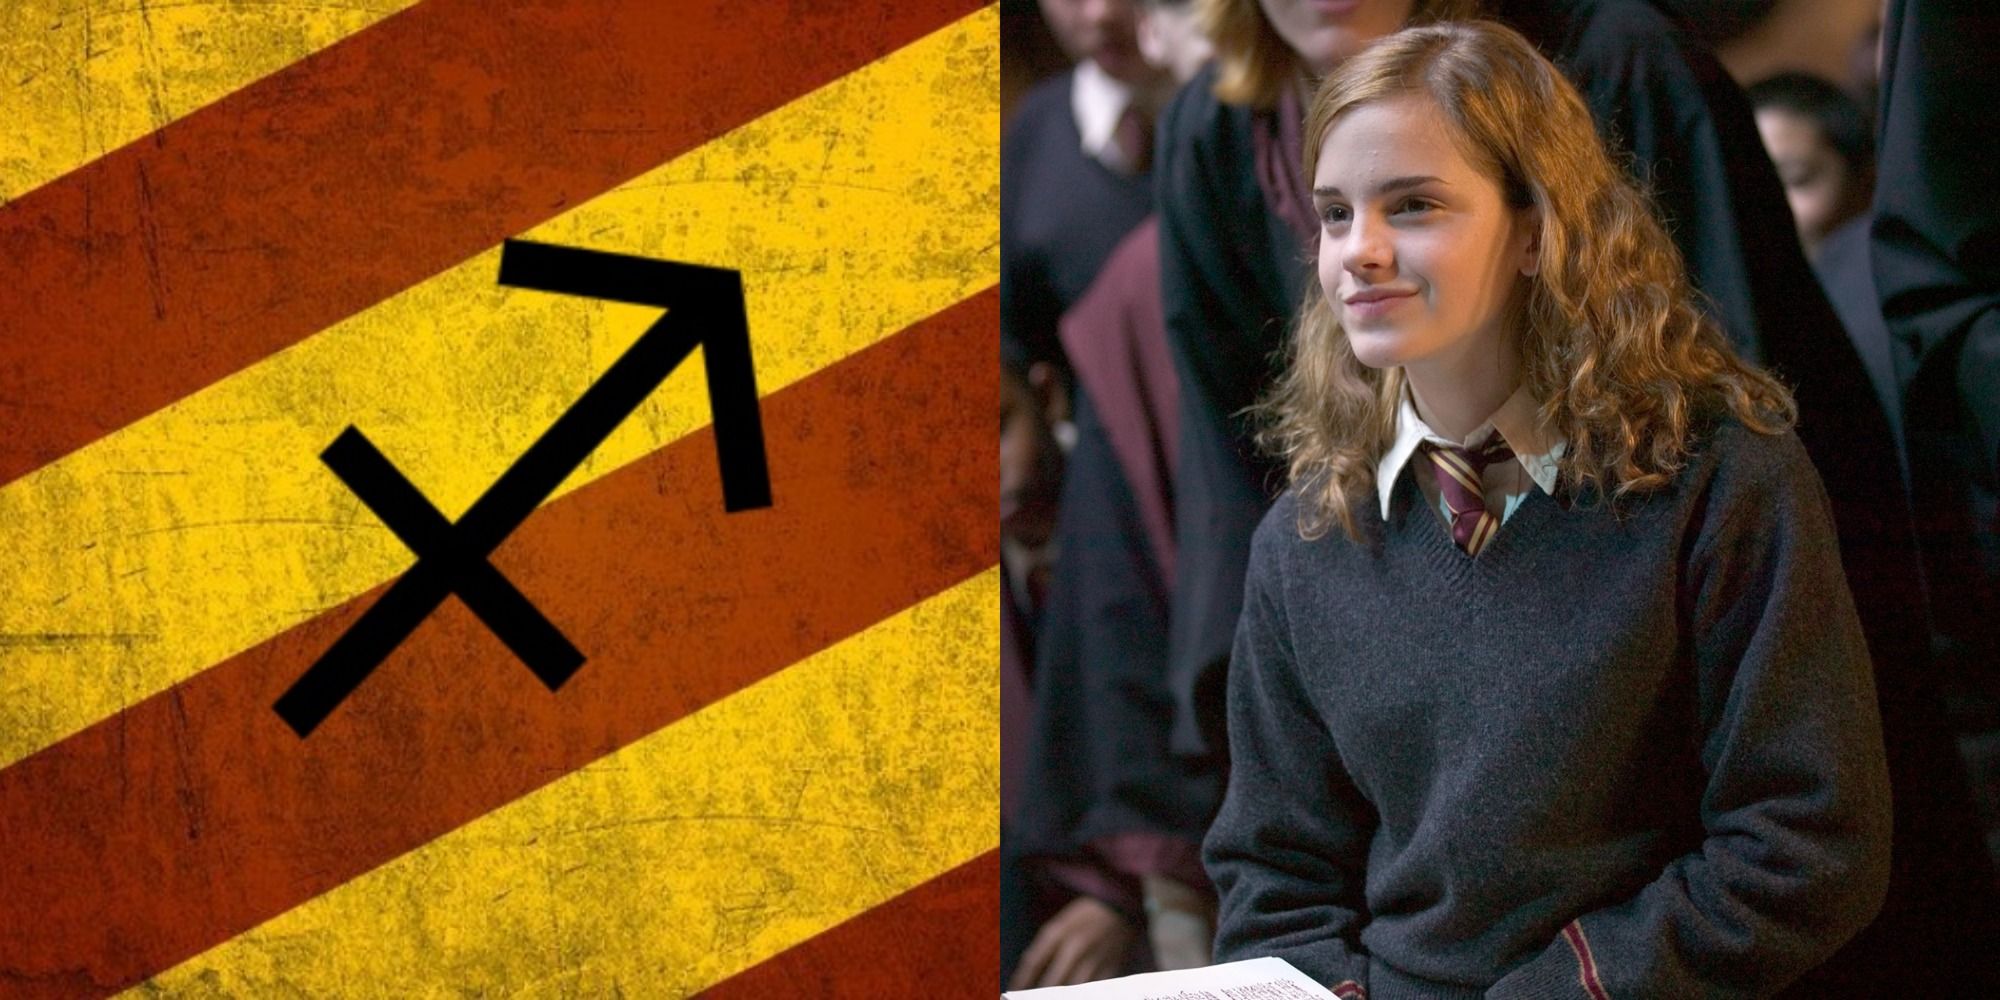 Sagittarius Symbol over red and yellow stripes next to Hermione Granger in Gryffindor uniform